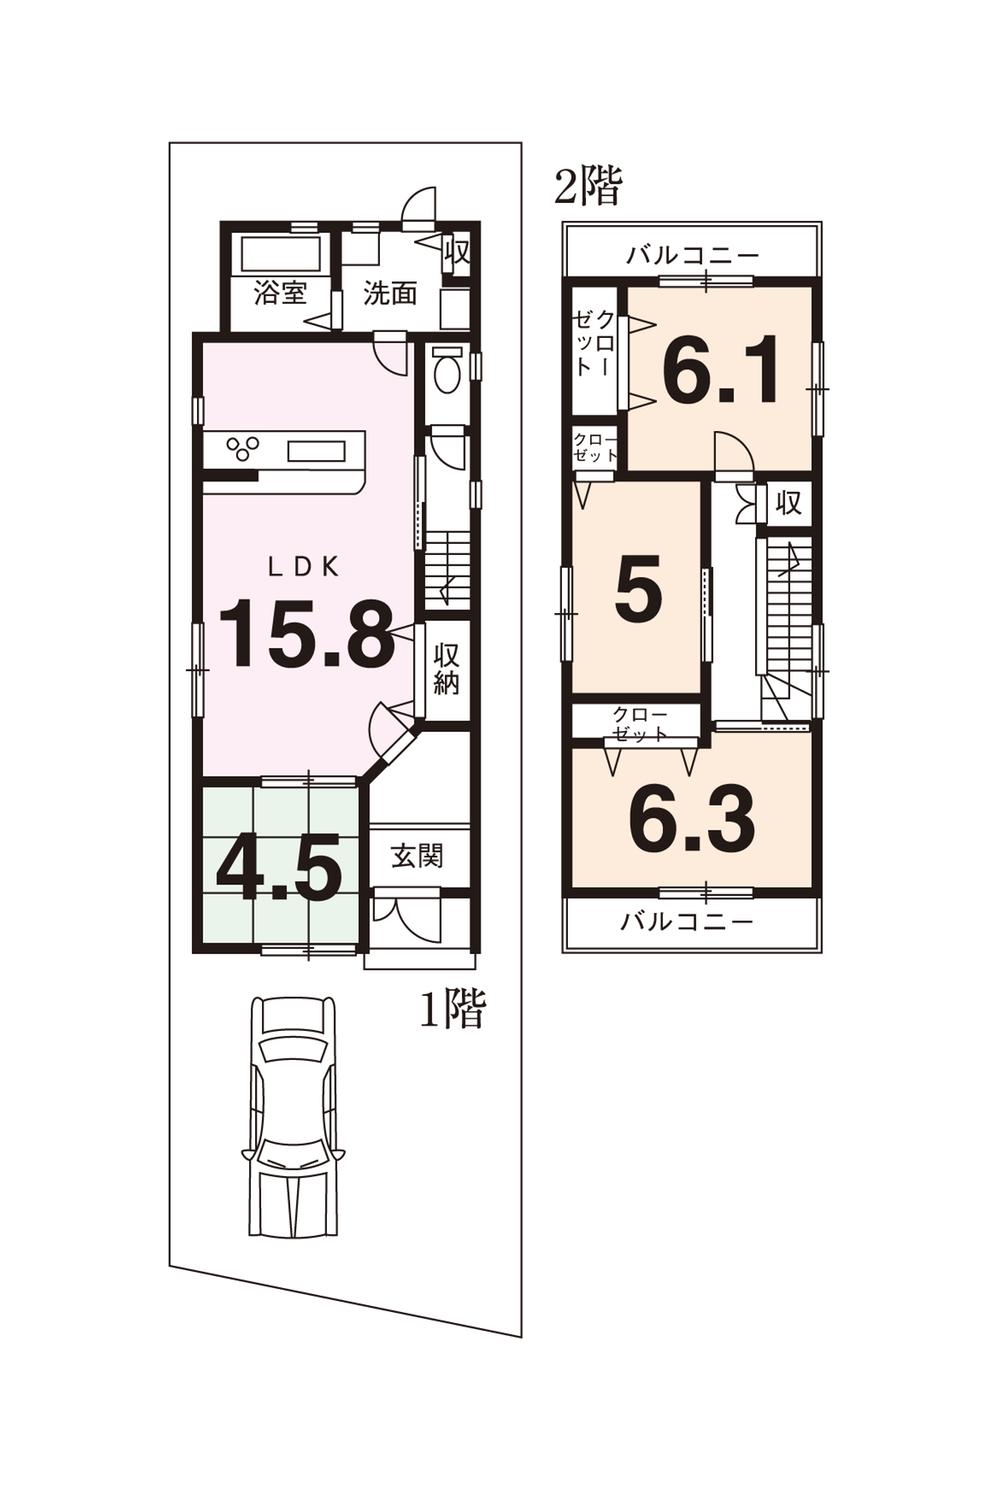 Building plan example (floor plan). Building plan example 4LDK, Land price 17.2 million yen, Land area 109.69 sq m , Building price 16,760,000 yen, Building area 90.32 sq m